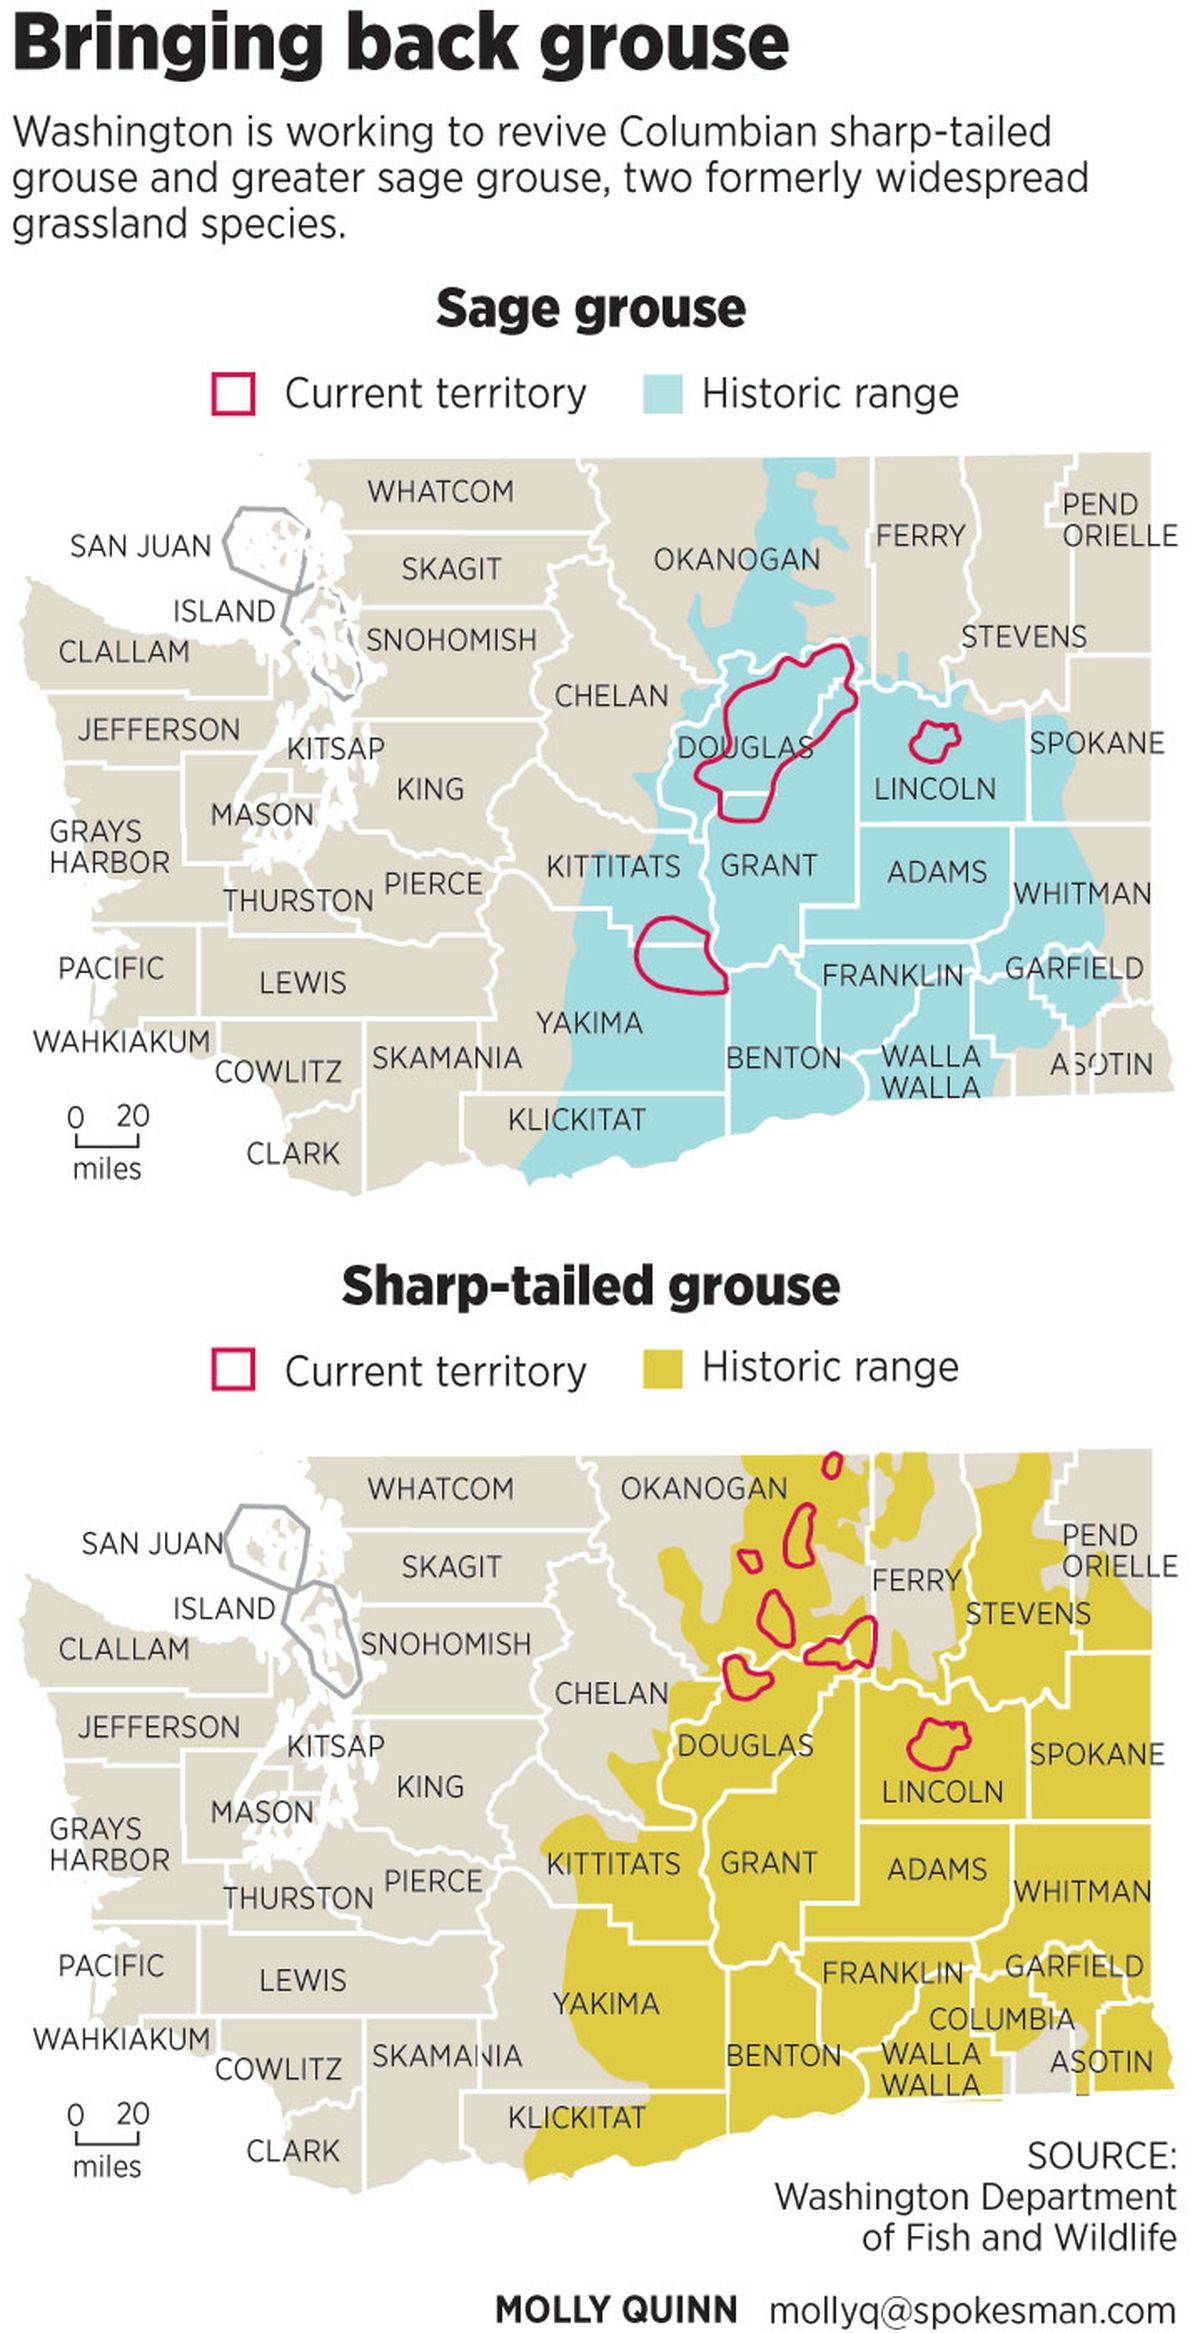 Sage and sharp-tailed grouse, Washington